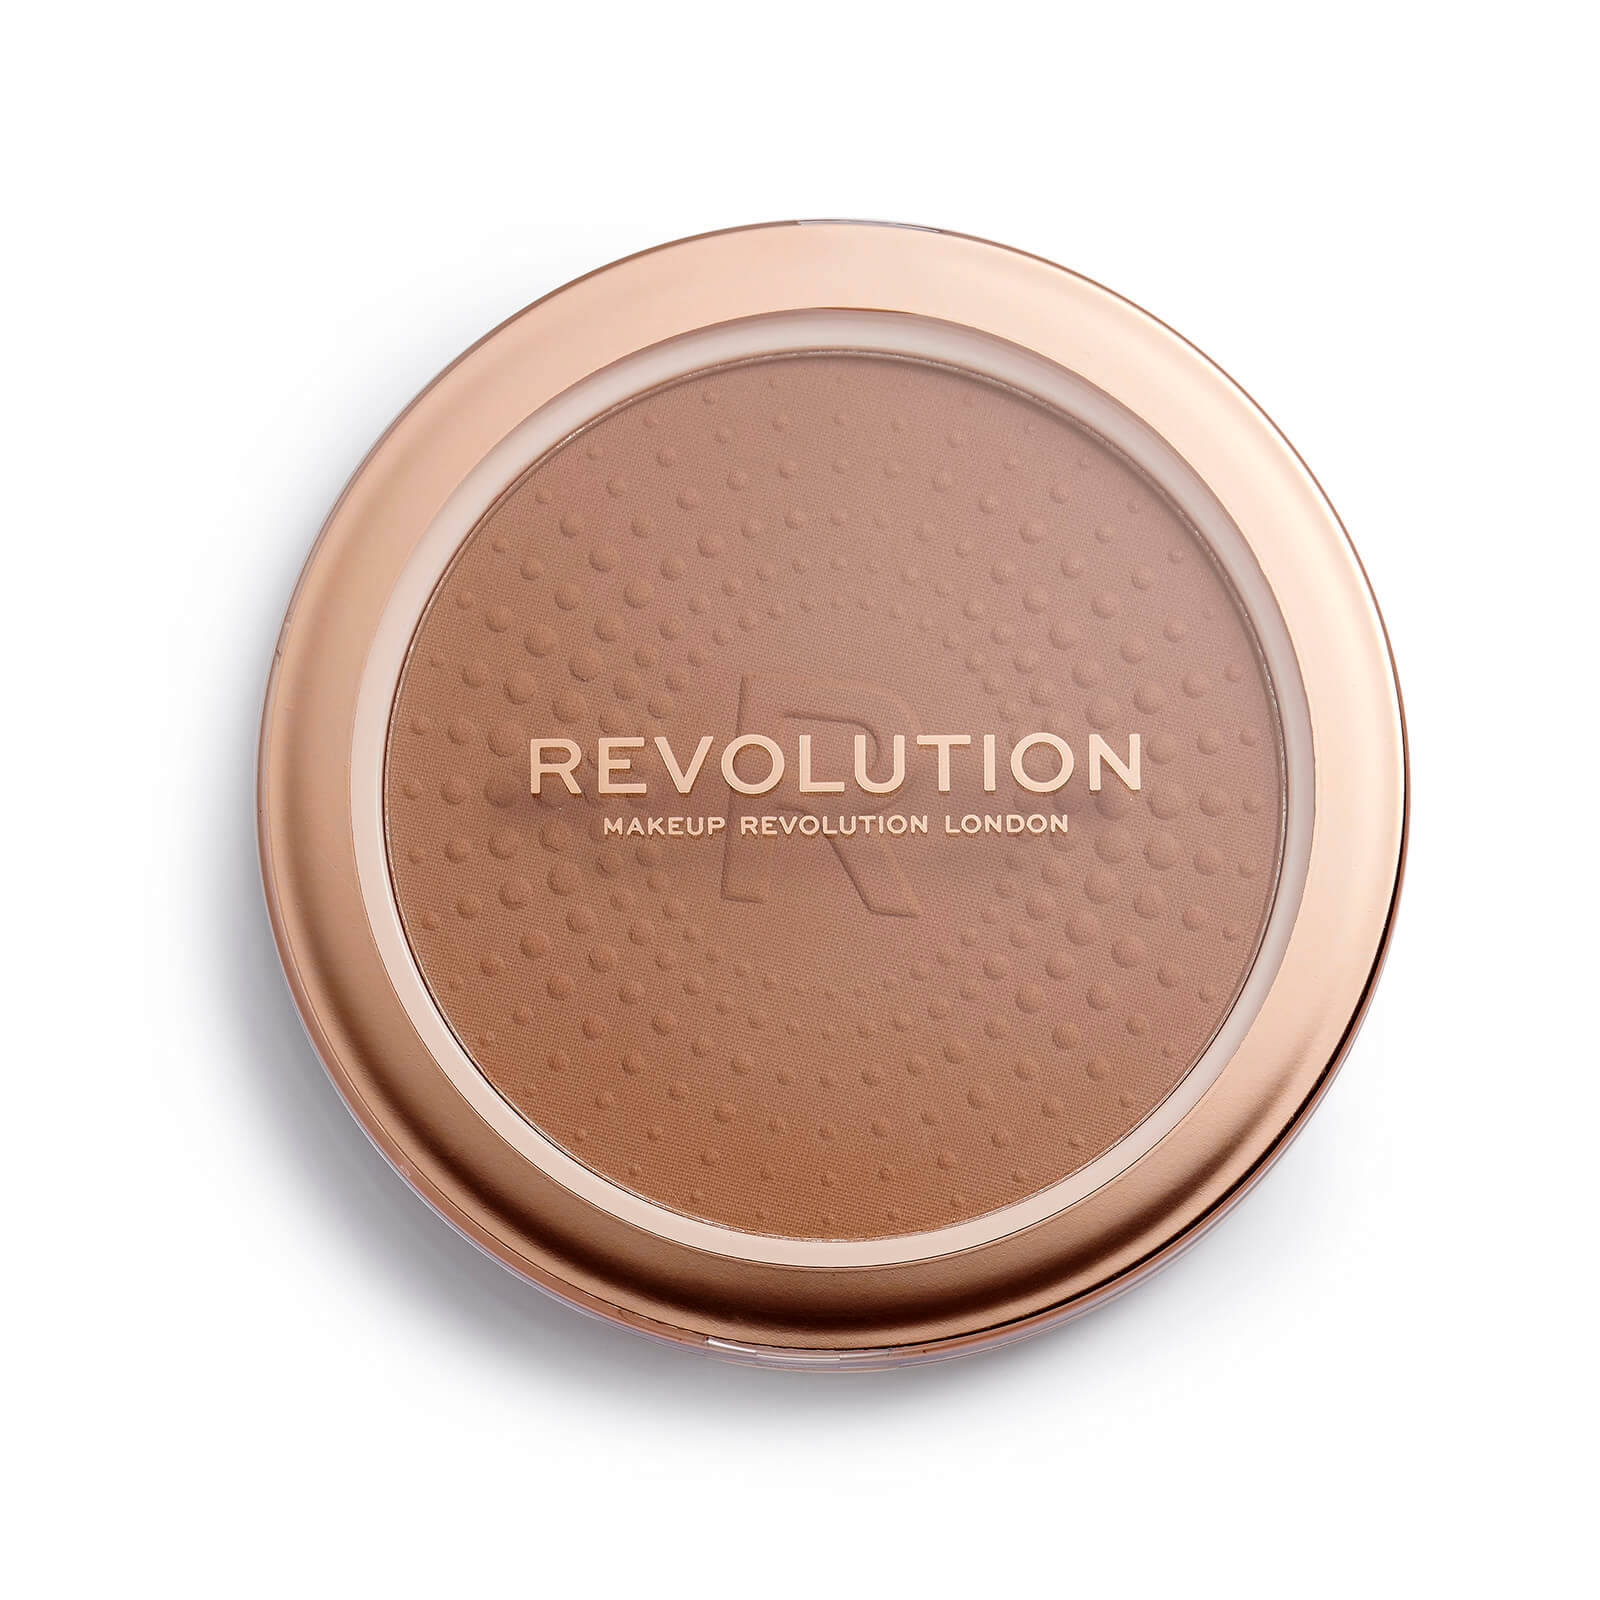 Makeup Revolution Mega Bronzer (Various Shades) - 02 Warm